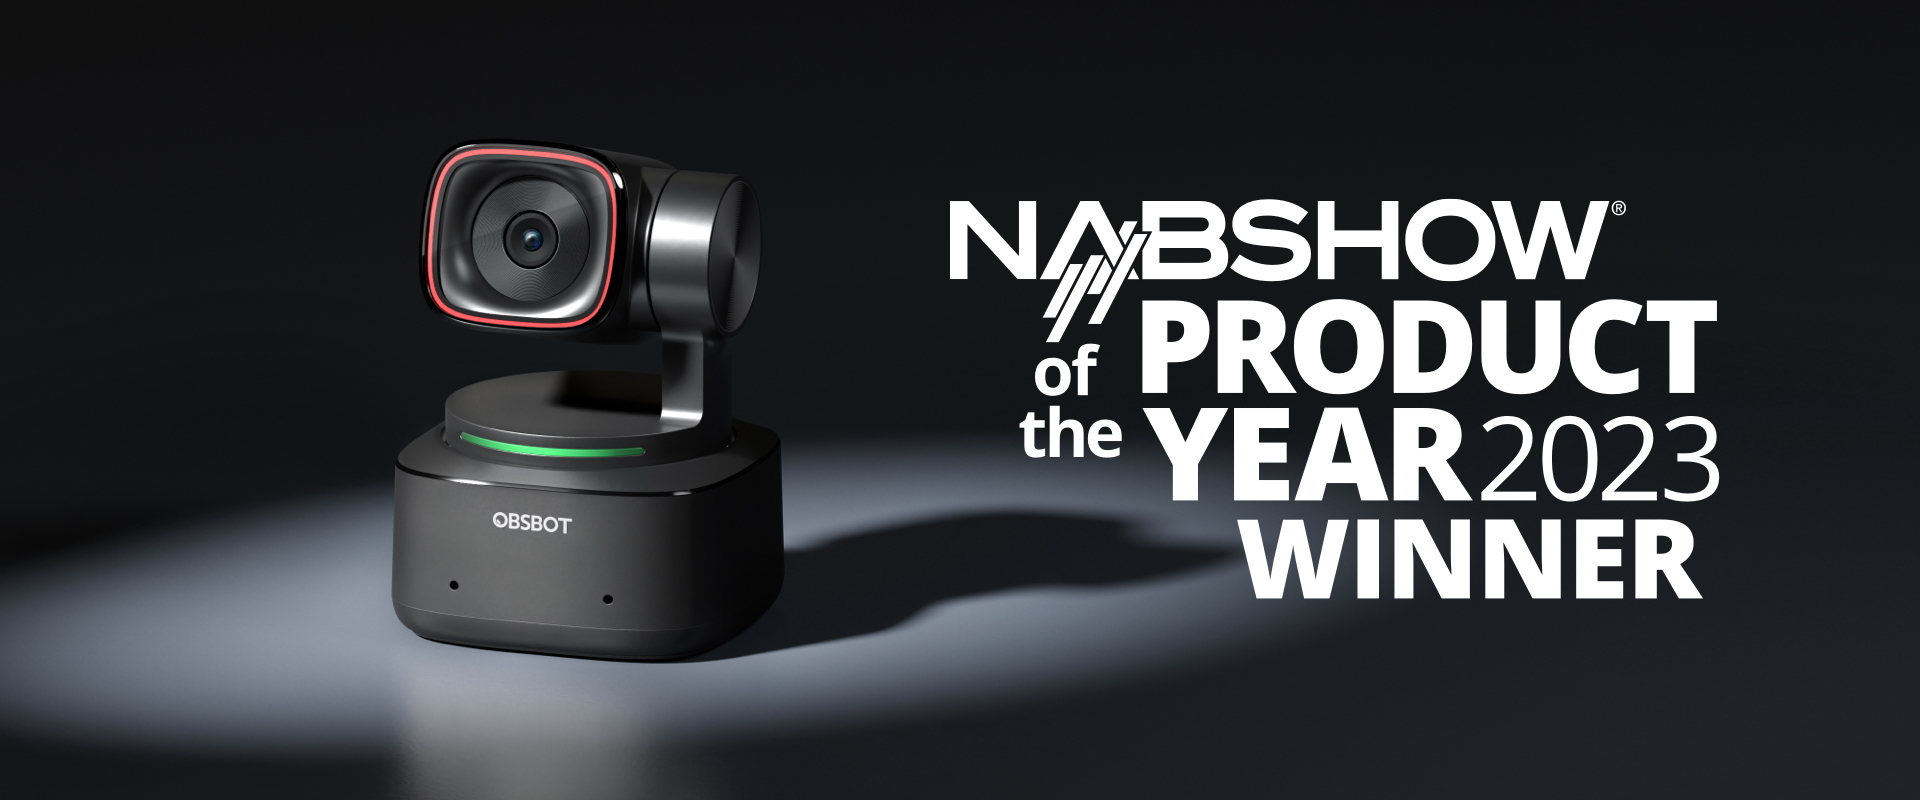 Tiny 2 wins 2023 NAB Show Product of the Year award